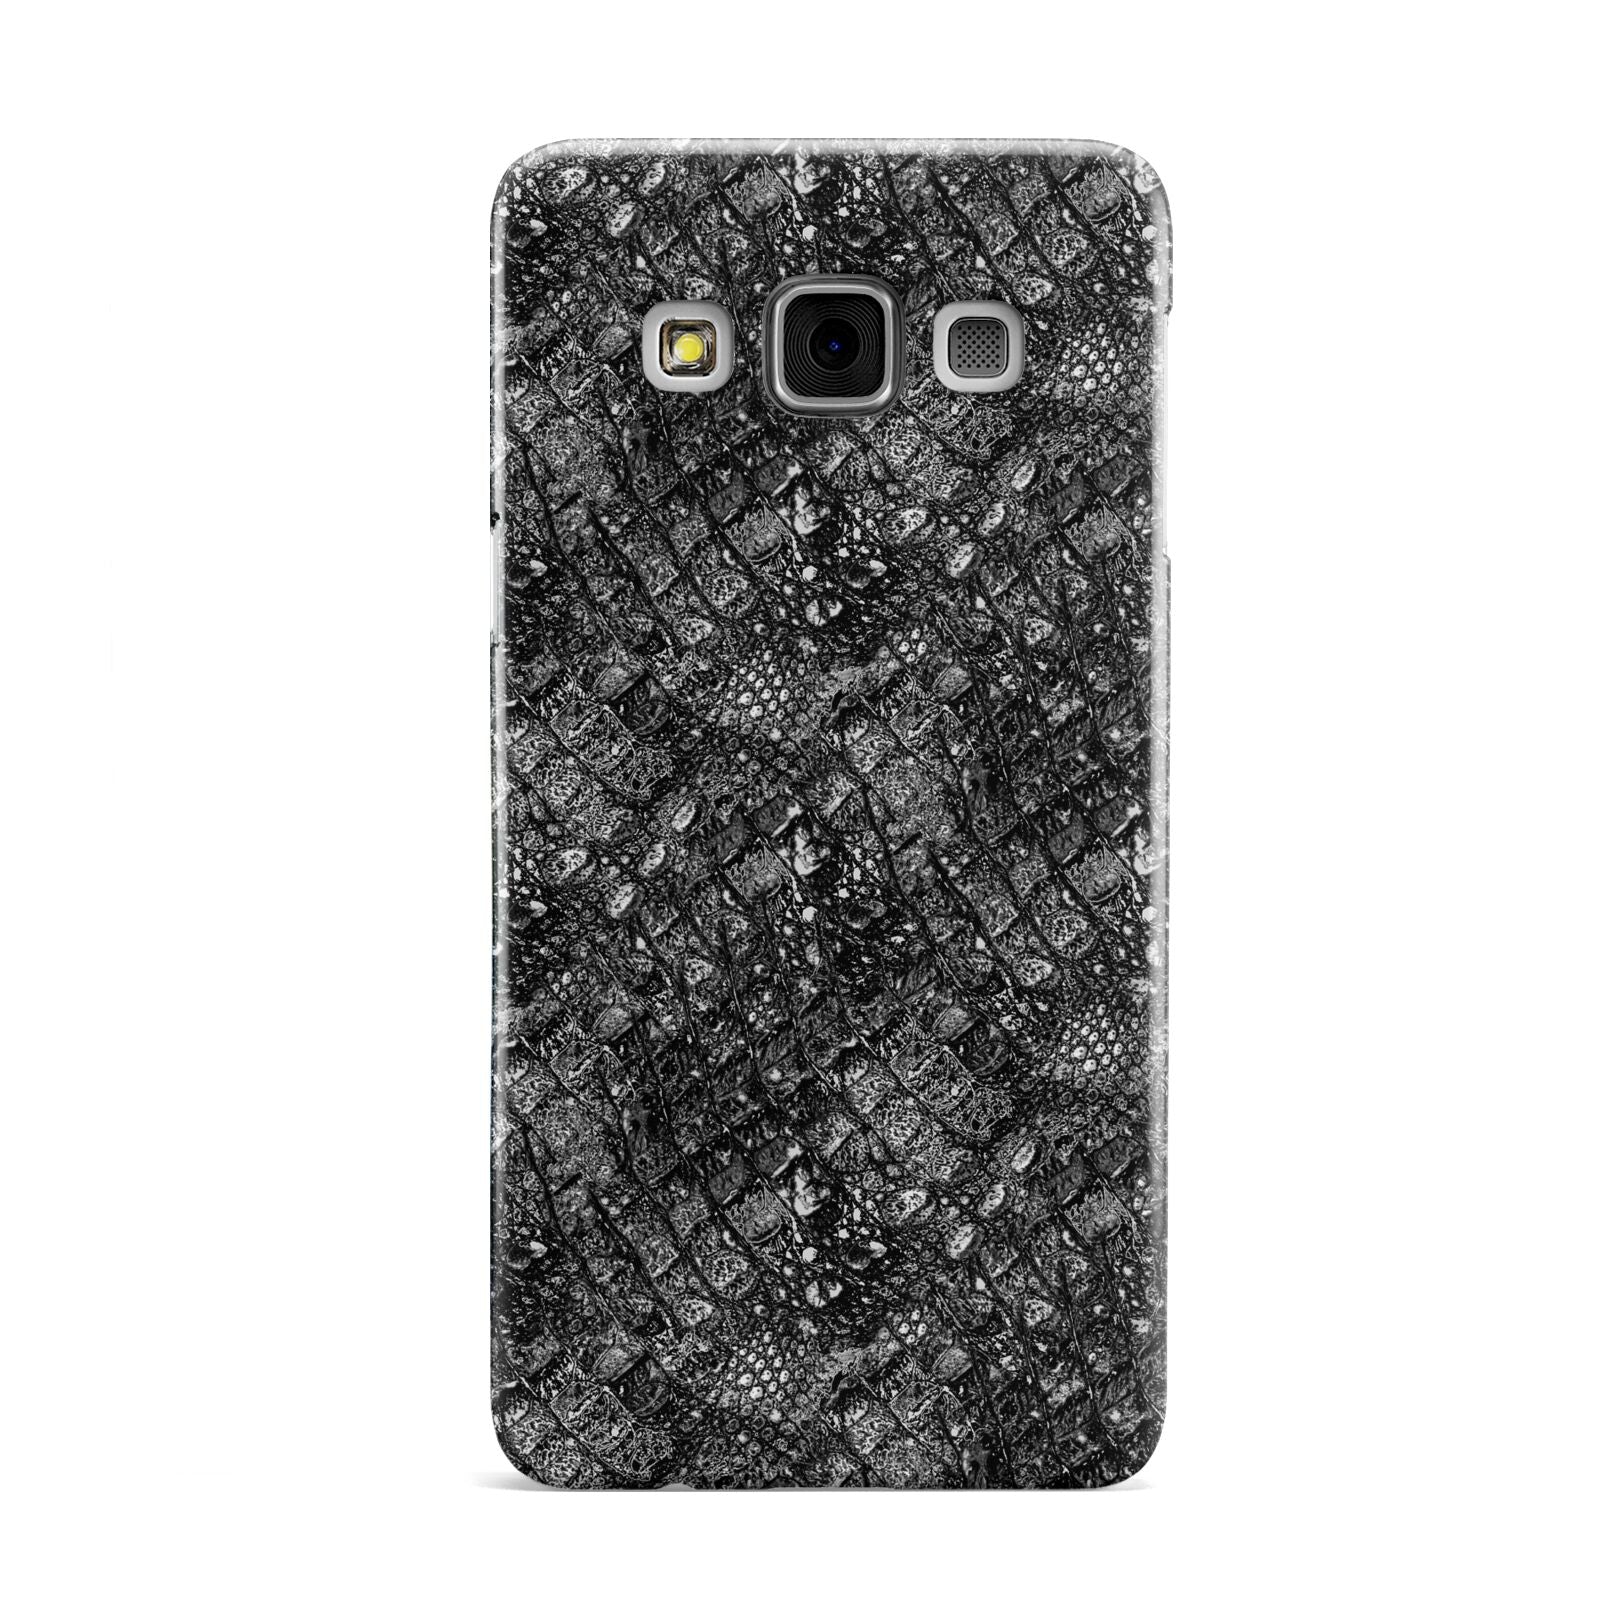 Snakeskin Design Samsung Galaxy A3 Case